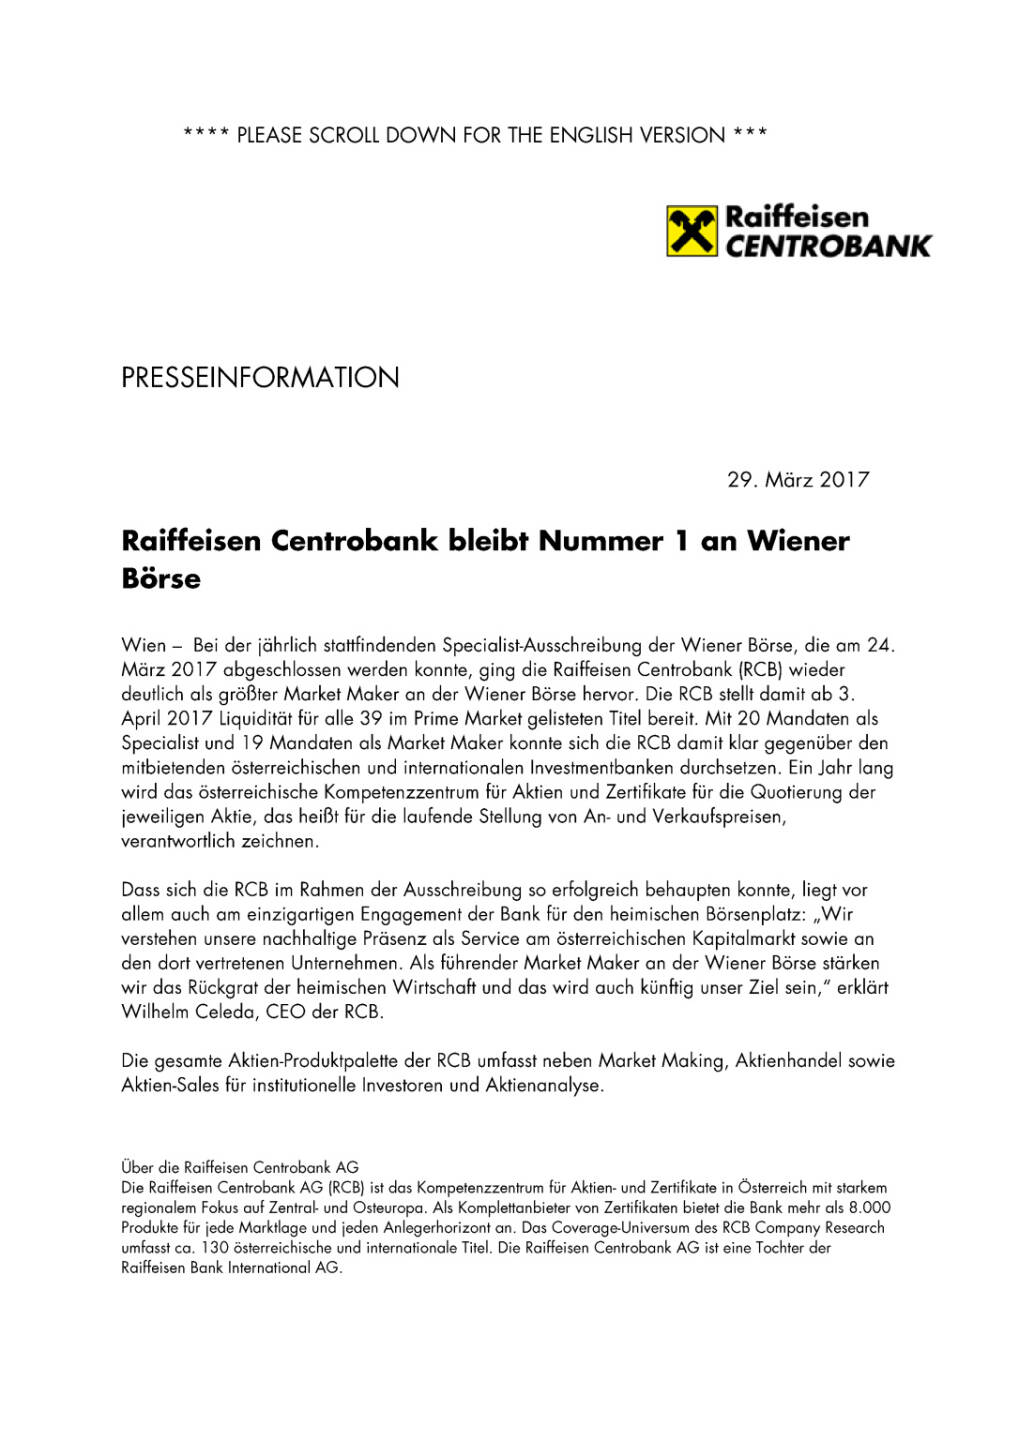 Raiffeisen Centrobank bleibt Nummer 1 an Wiener Börse, Seite 1/2, komplettes Dokument unter http://boerse-social.com/static/uploads/file_2184_raiffeisen_centrobank_bleibt_nummer_1_an_wiener_borse.pdf